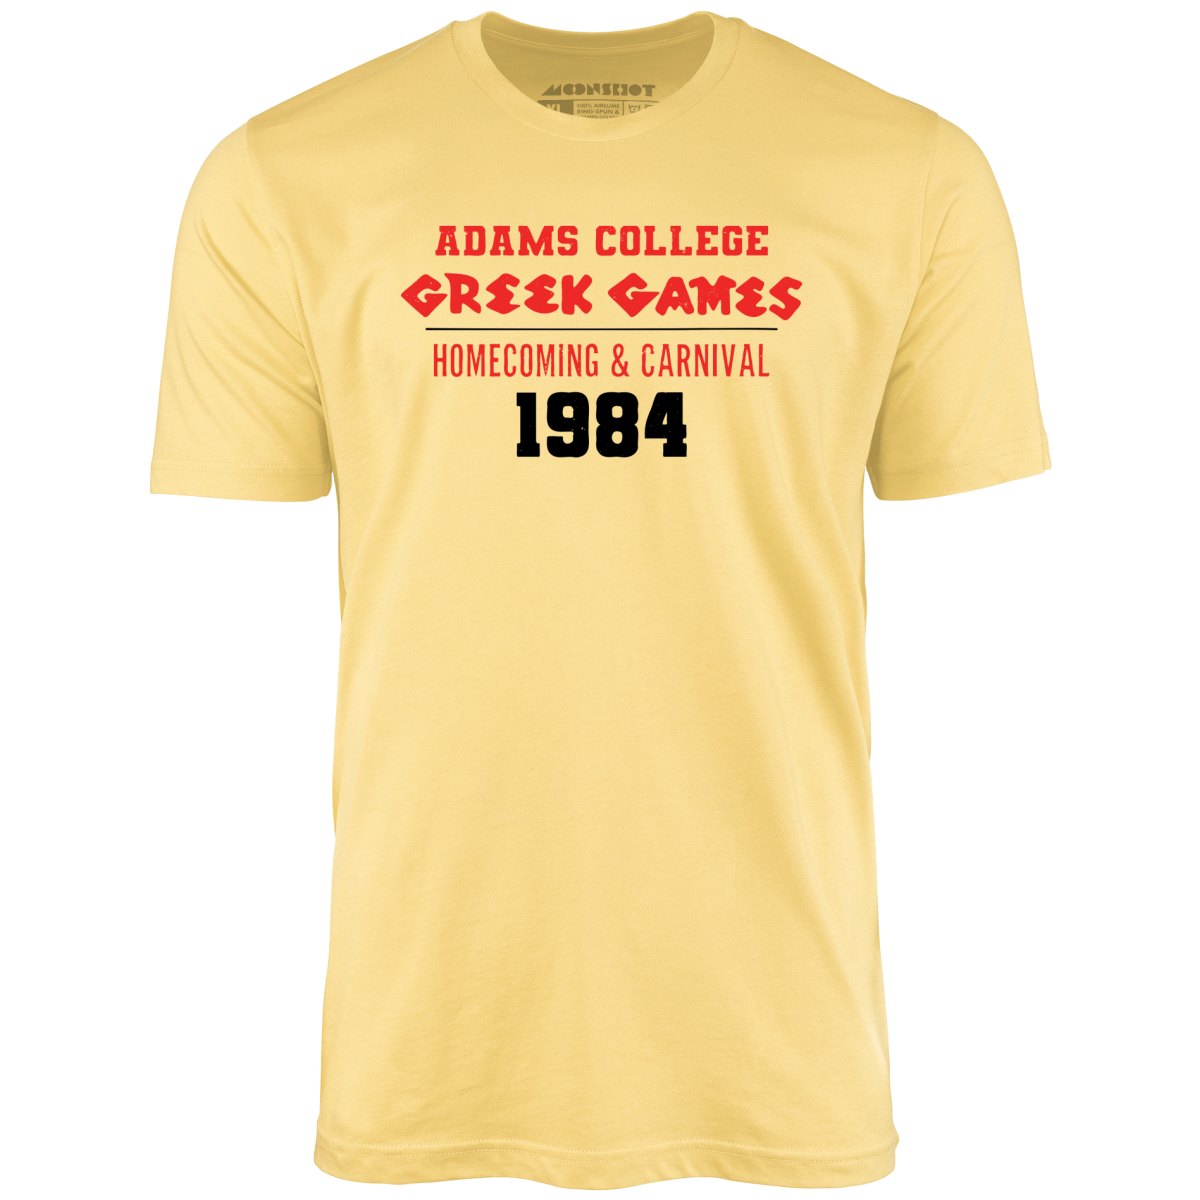 Adams College Greek Games 1984 - Unisex T-Shirt